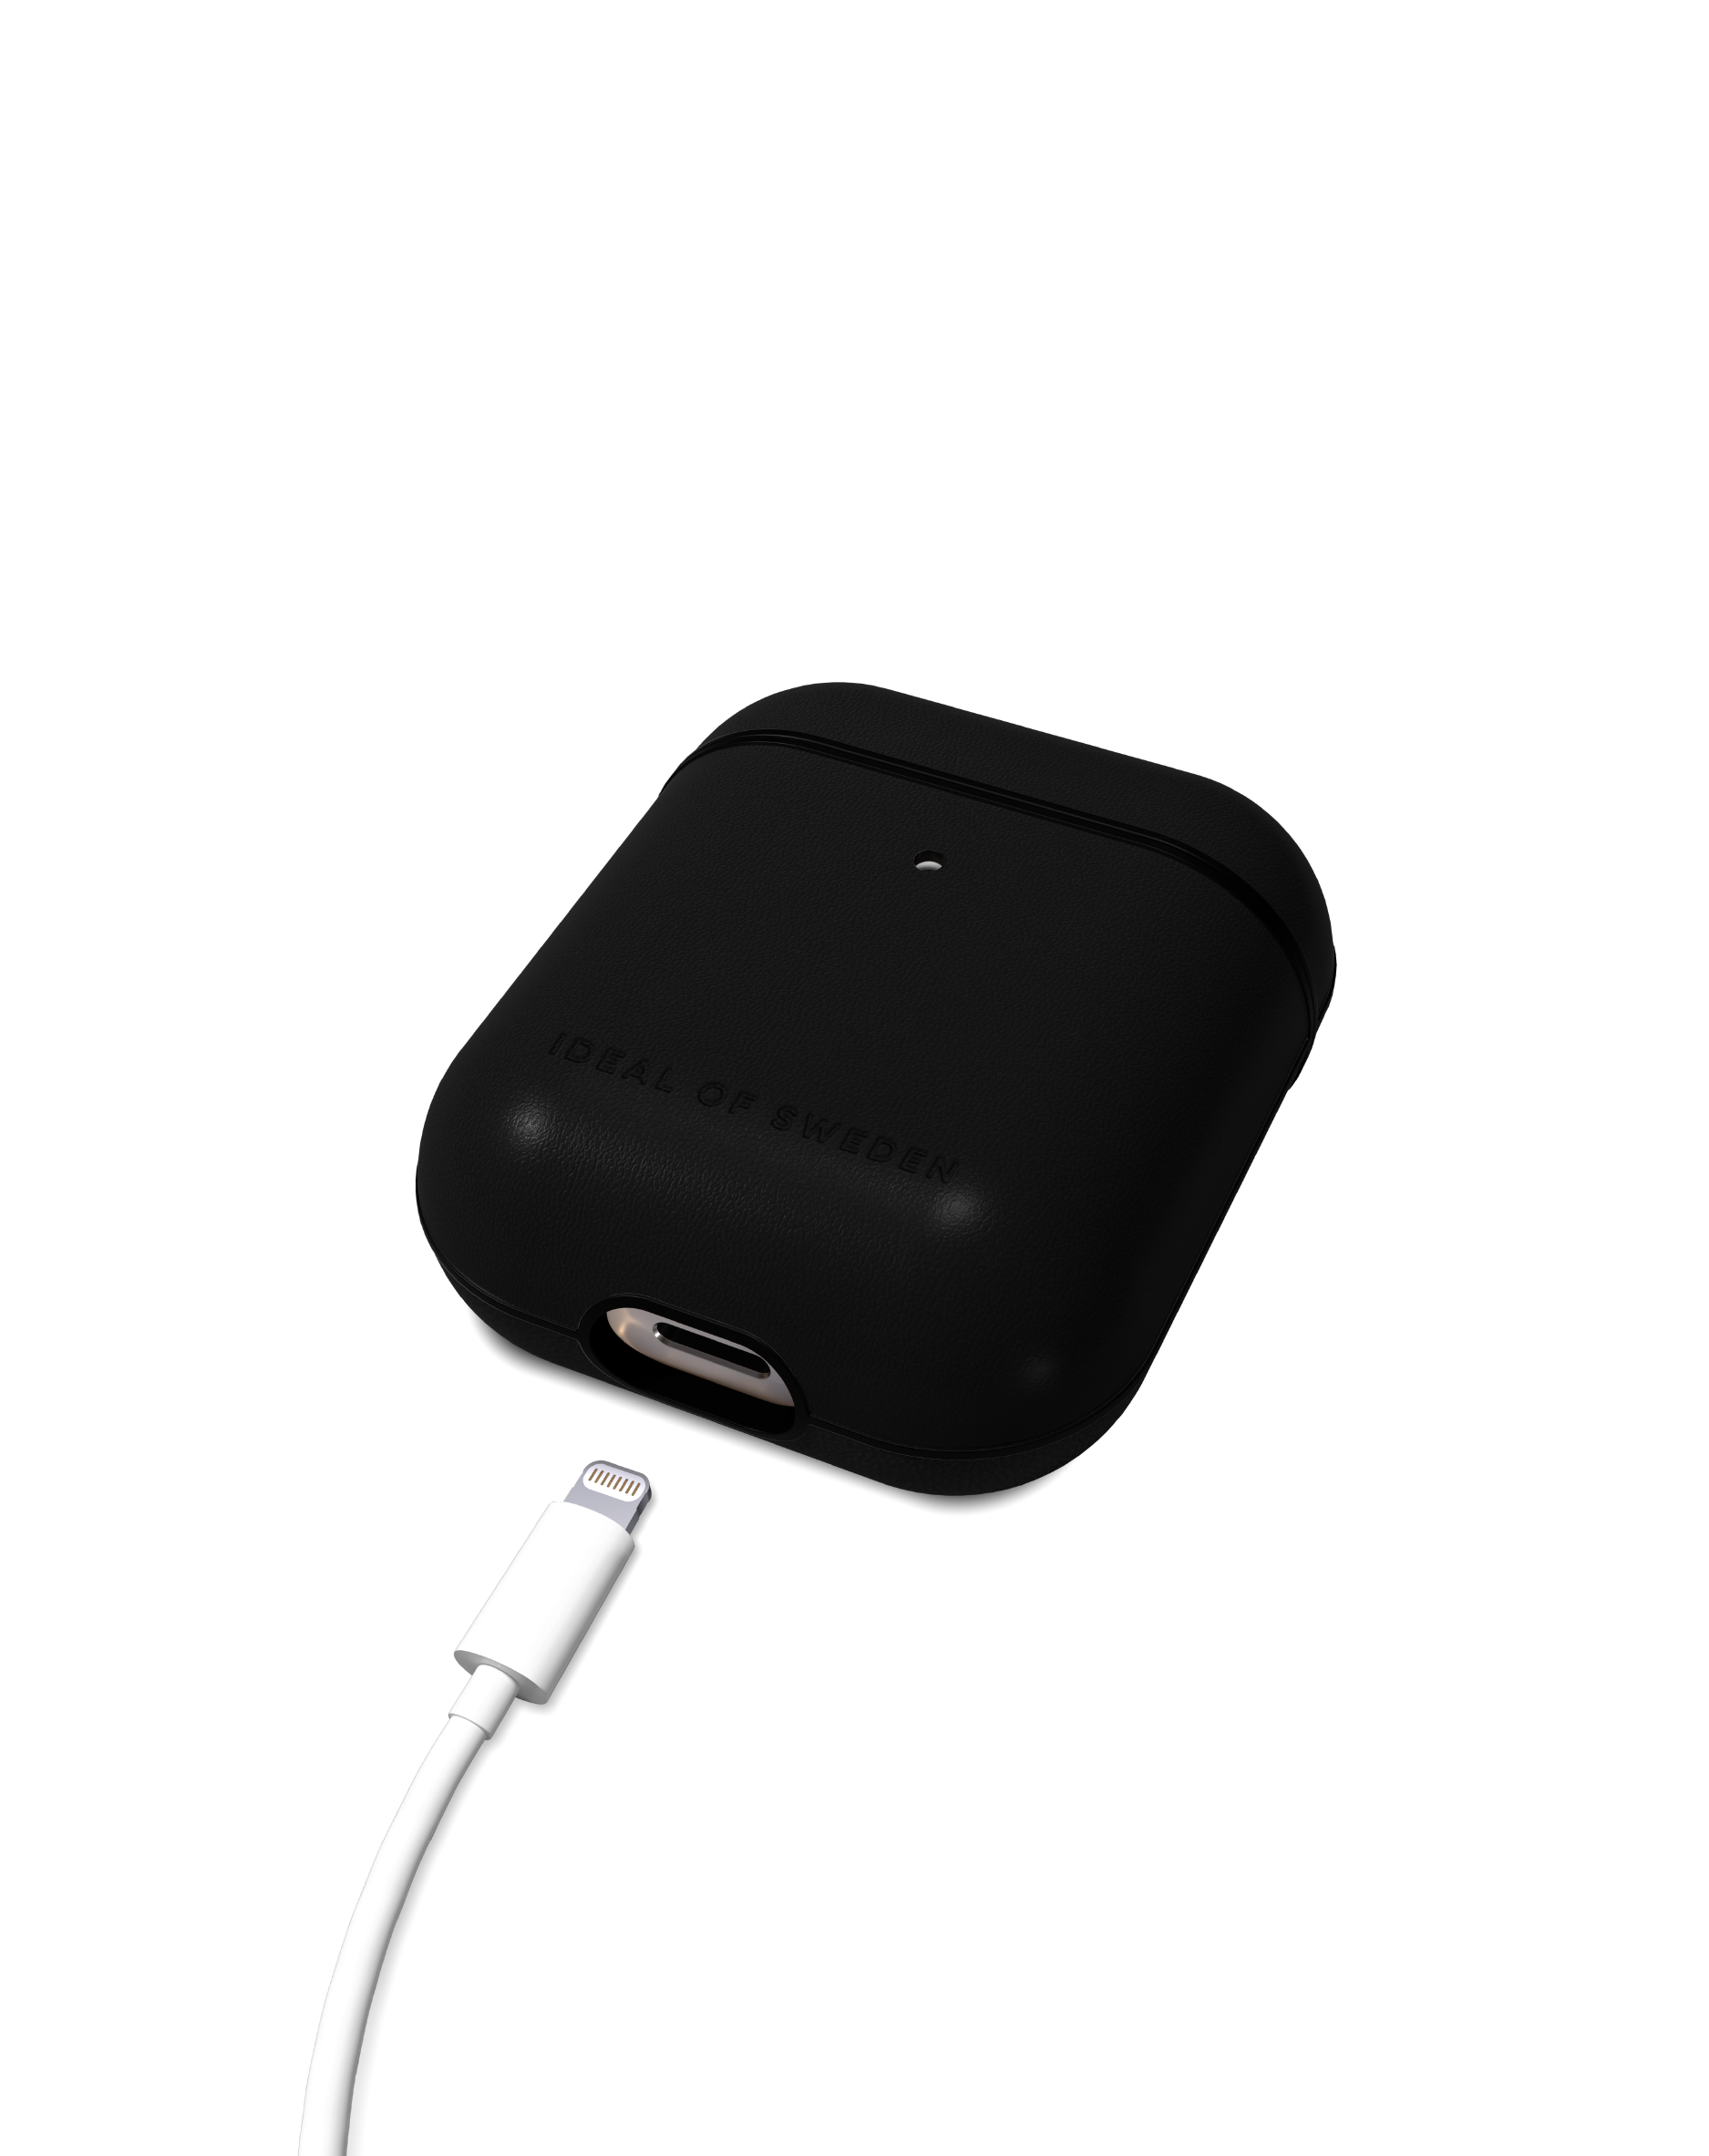 IDEAL OF SWEDEN Apple AirPod IDAAPC-COM-01 für: Case passend Black Cover Full